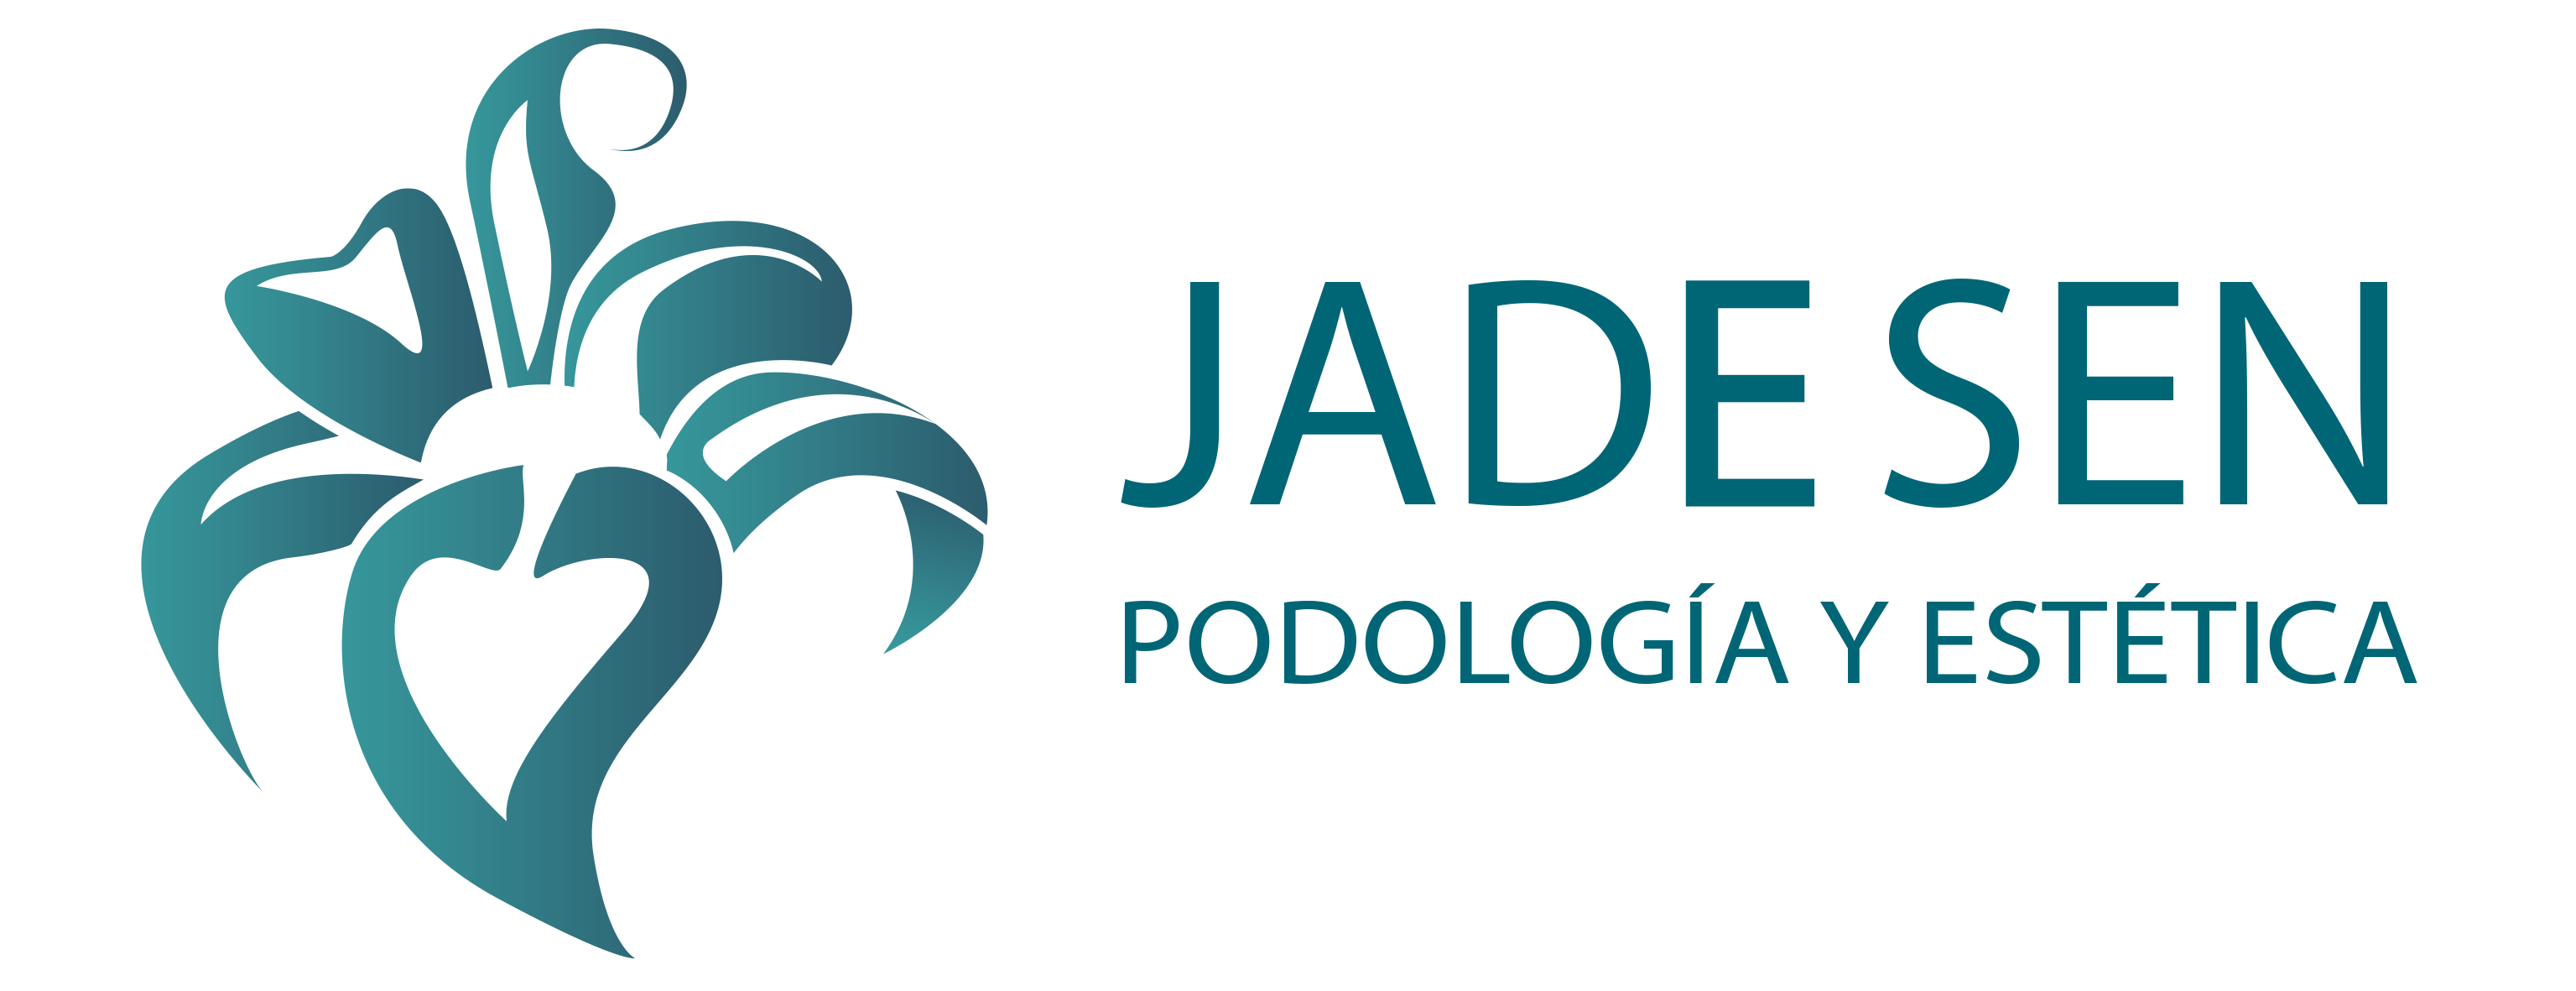 JadeSen Agenda